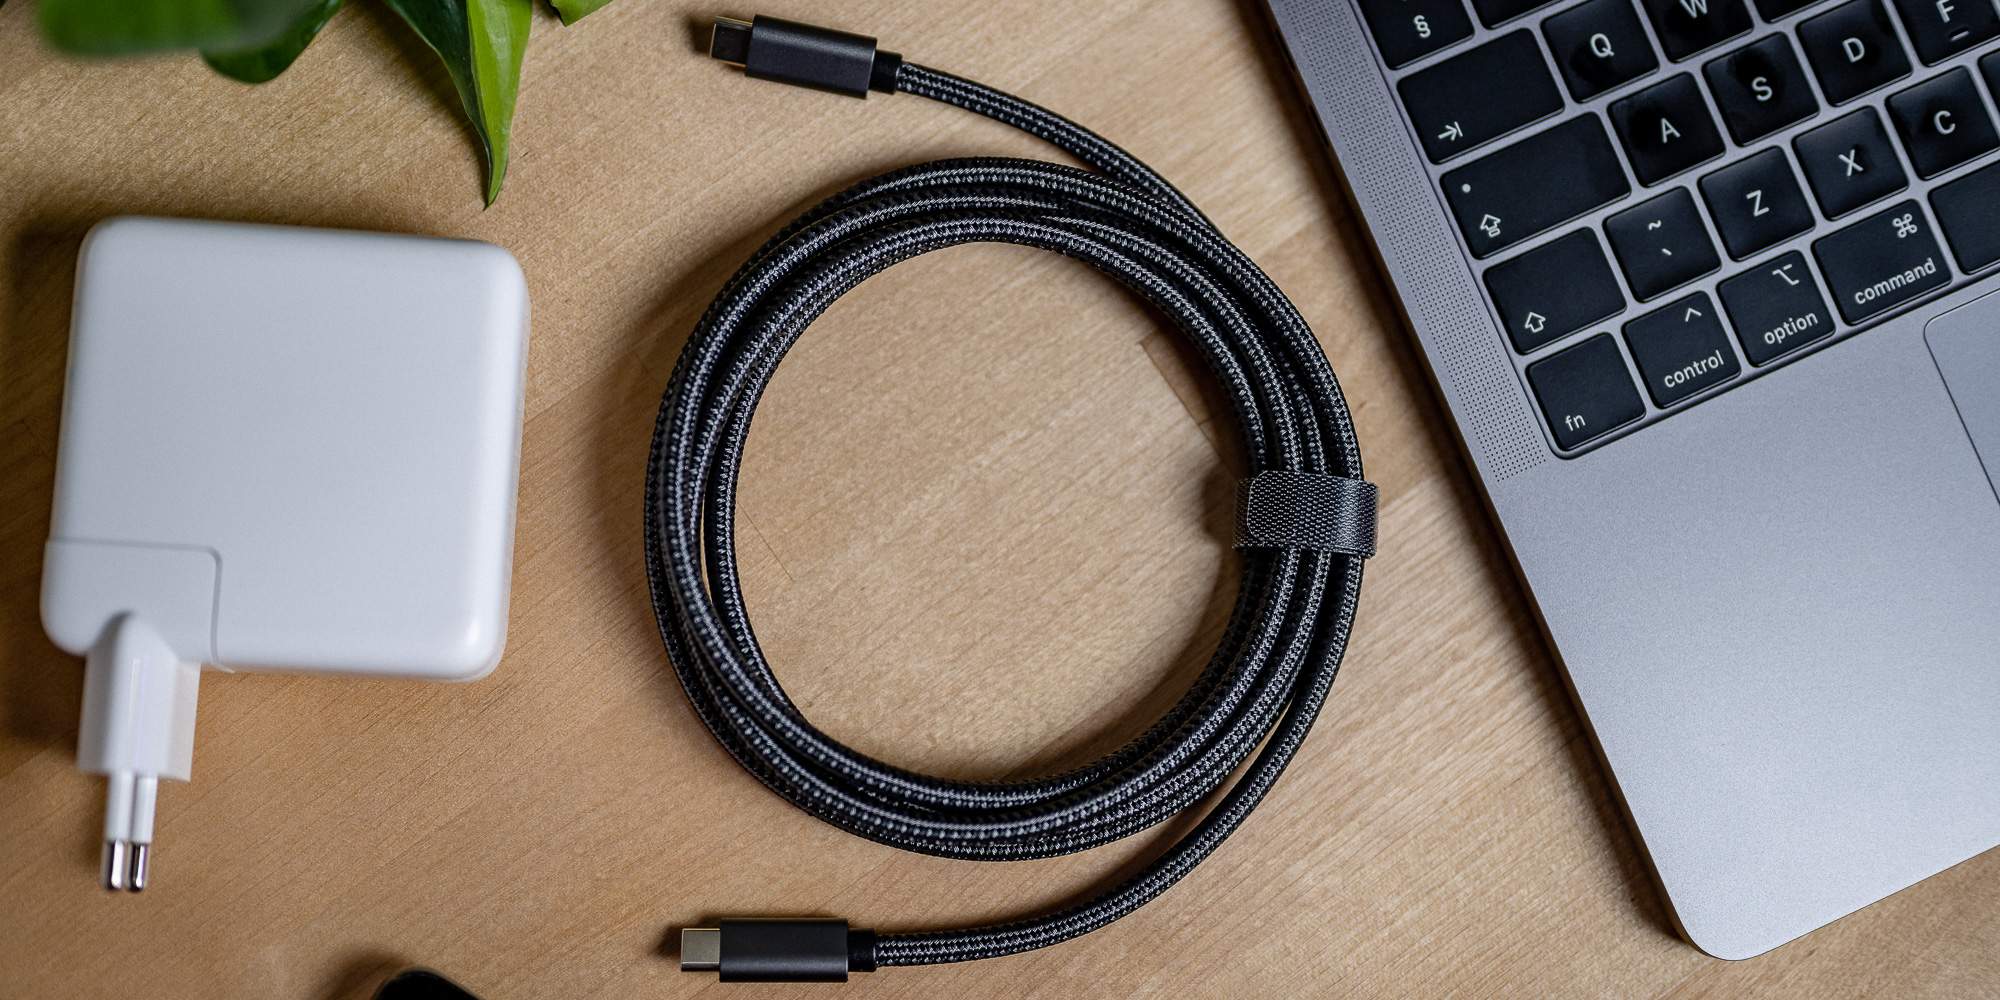 Newell USB C - USB-C 3.2 Gen 2 cable - 2 m, graphite